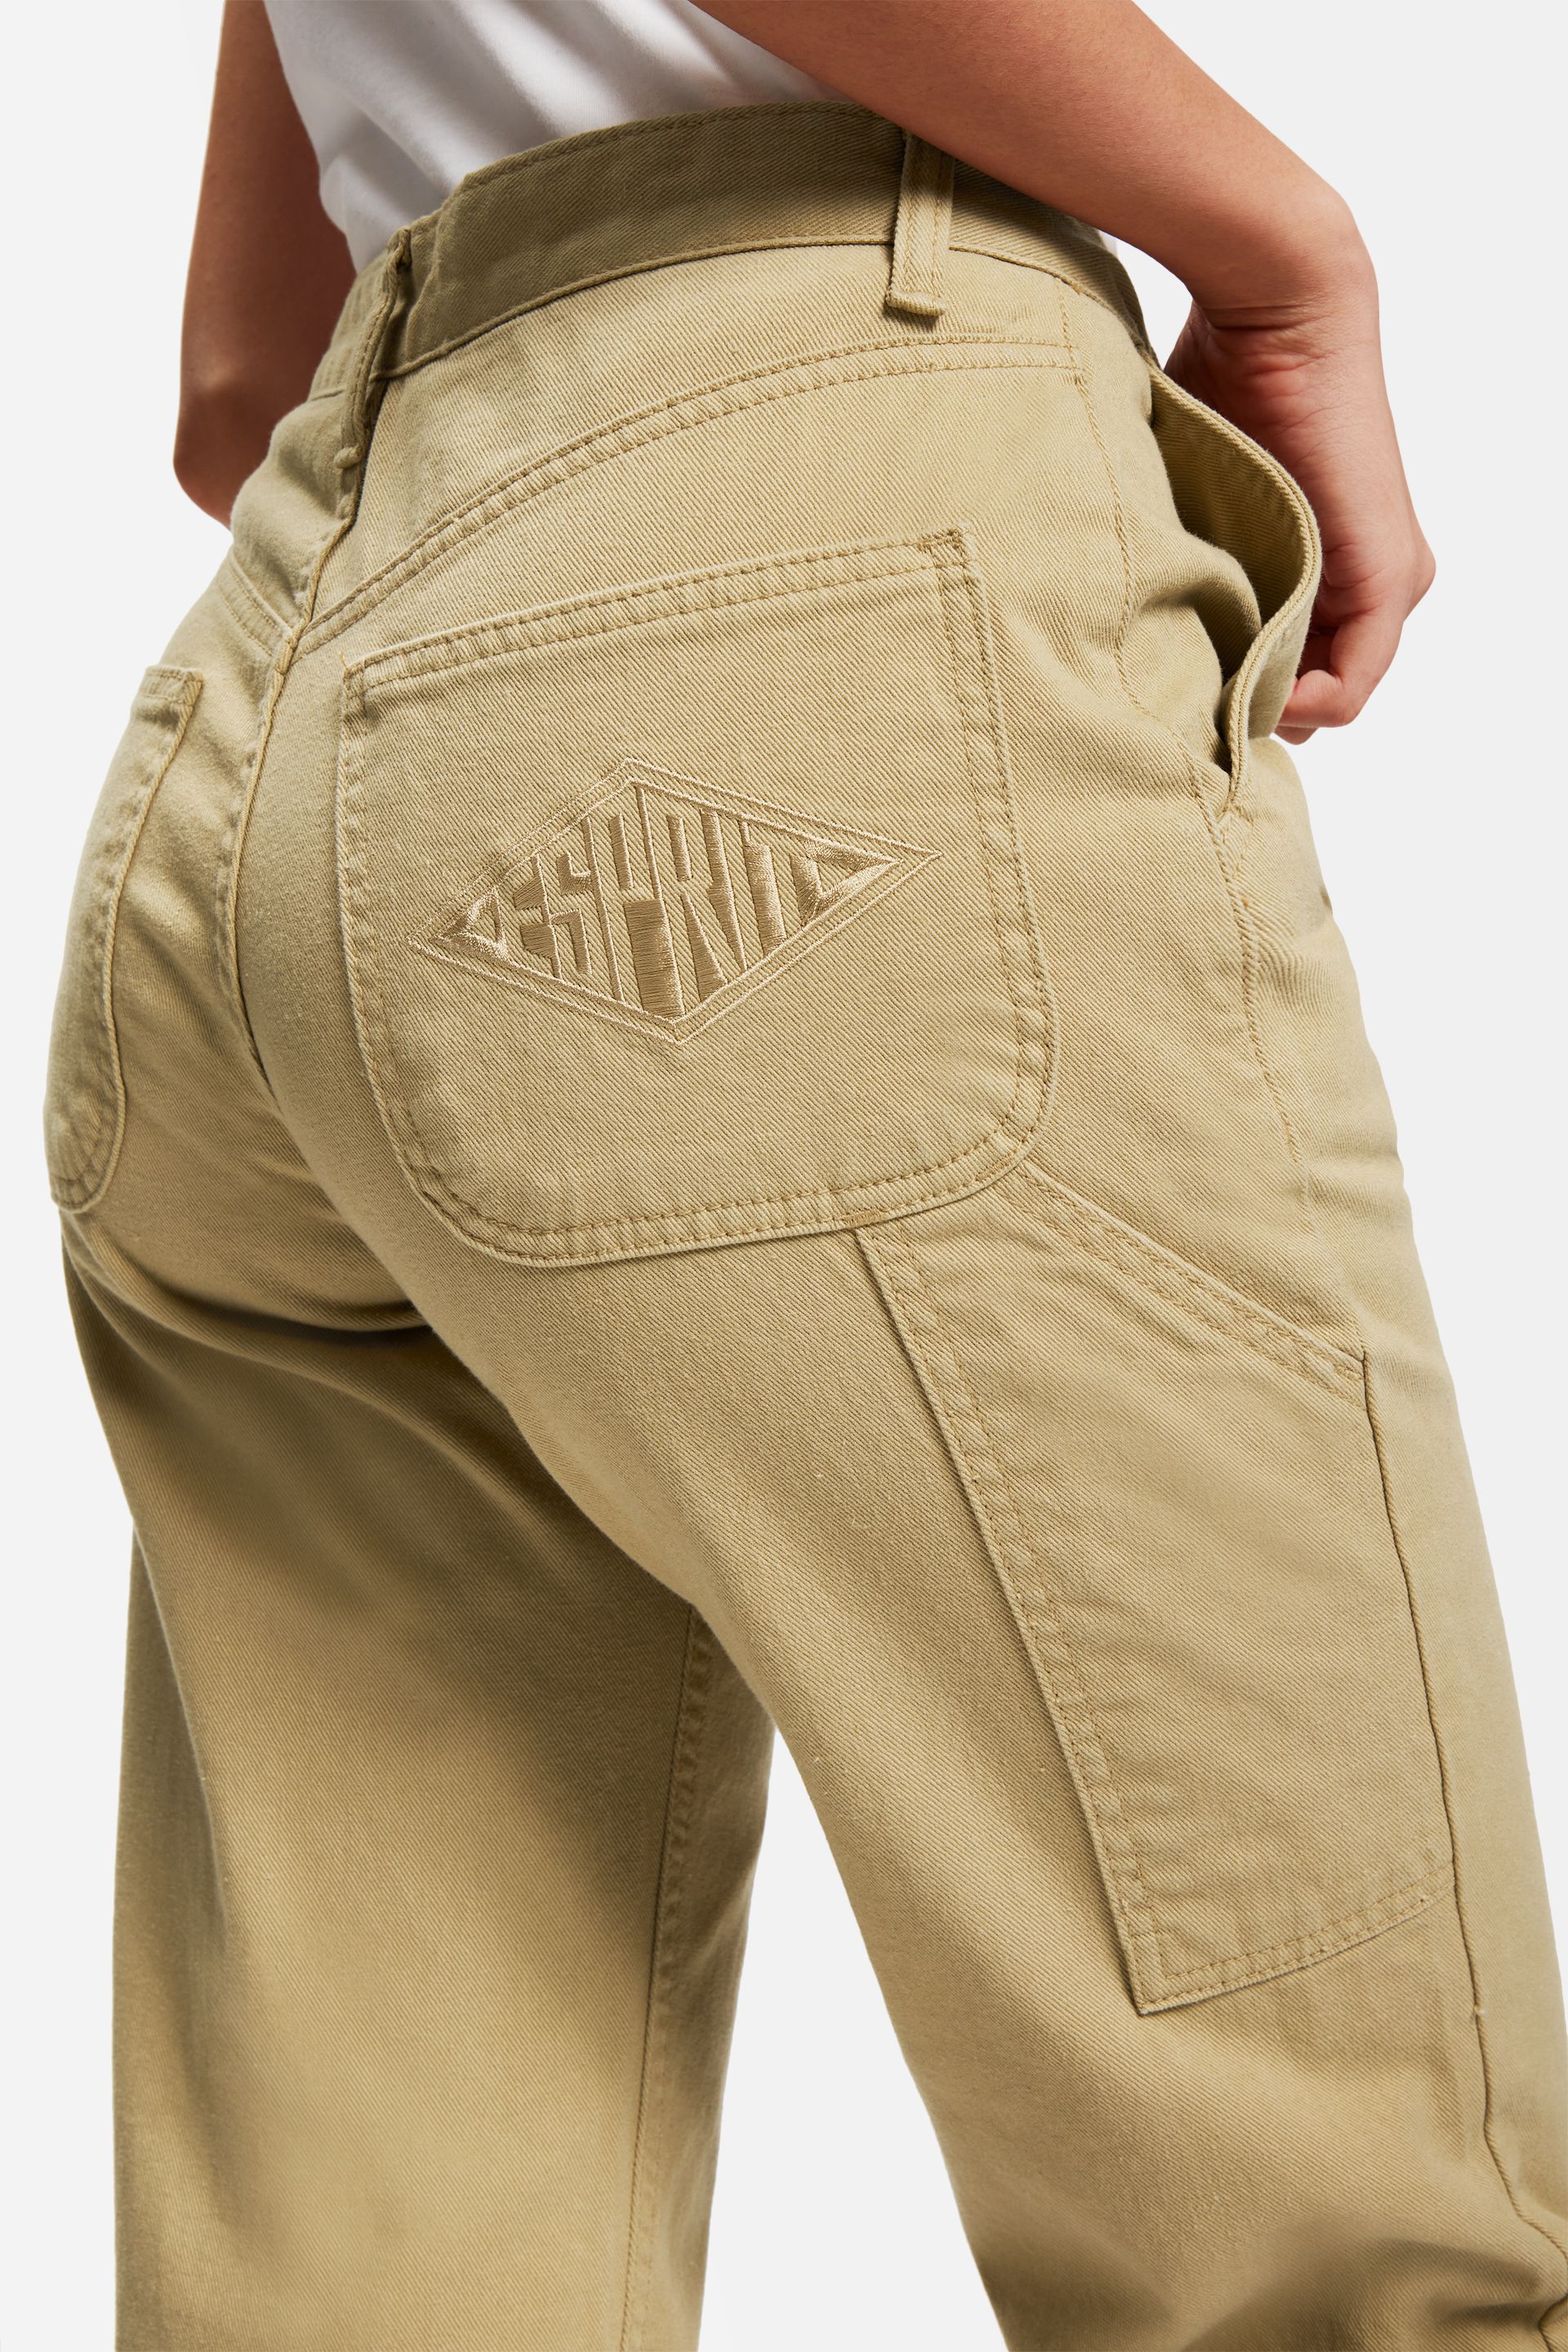 Esprit  Pants  Jumpsuits  Edc By Esprit Denim Khaki Cargo Pants   Poshmark